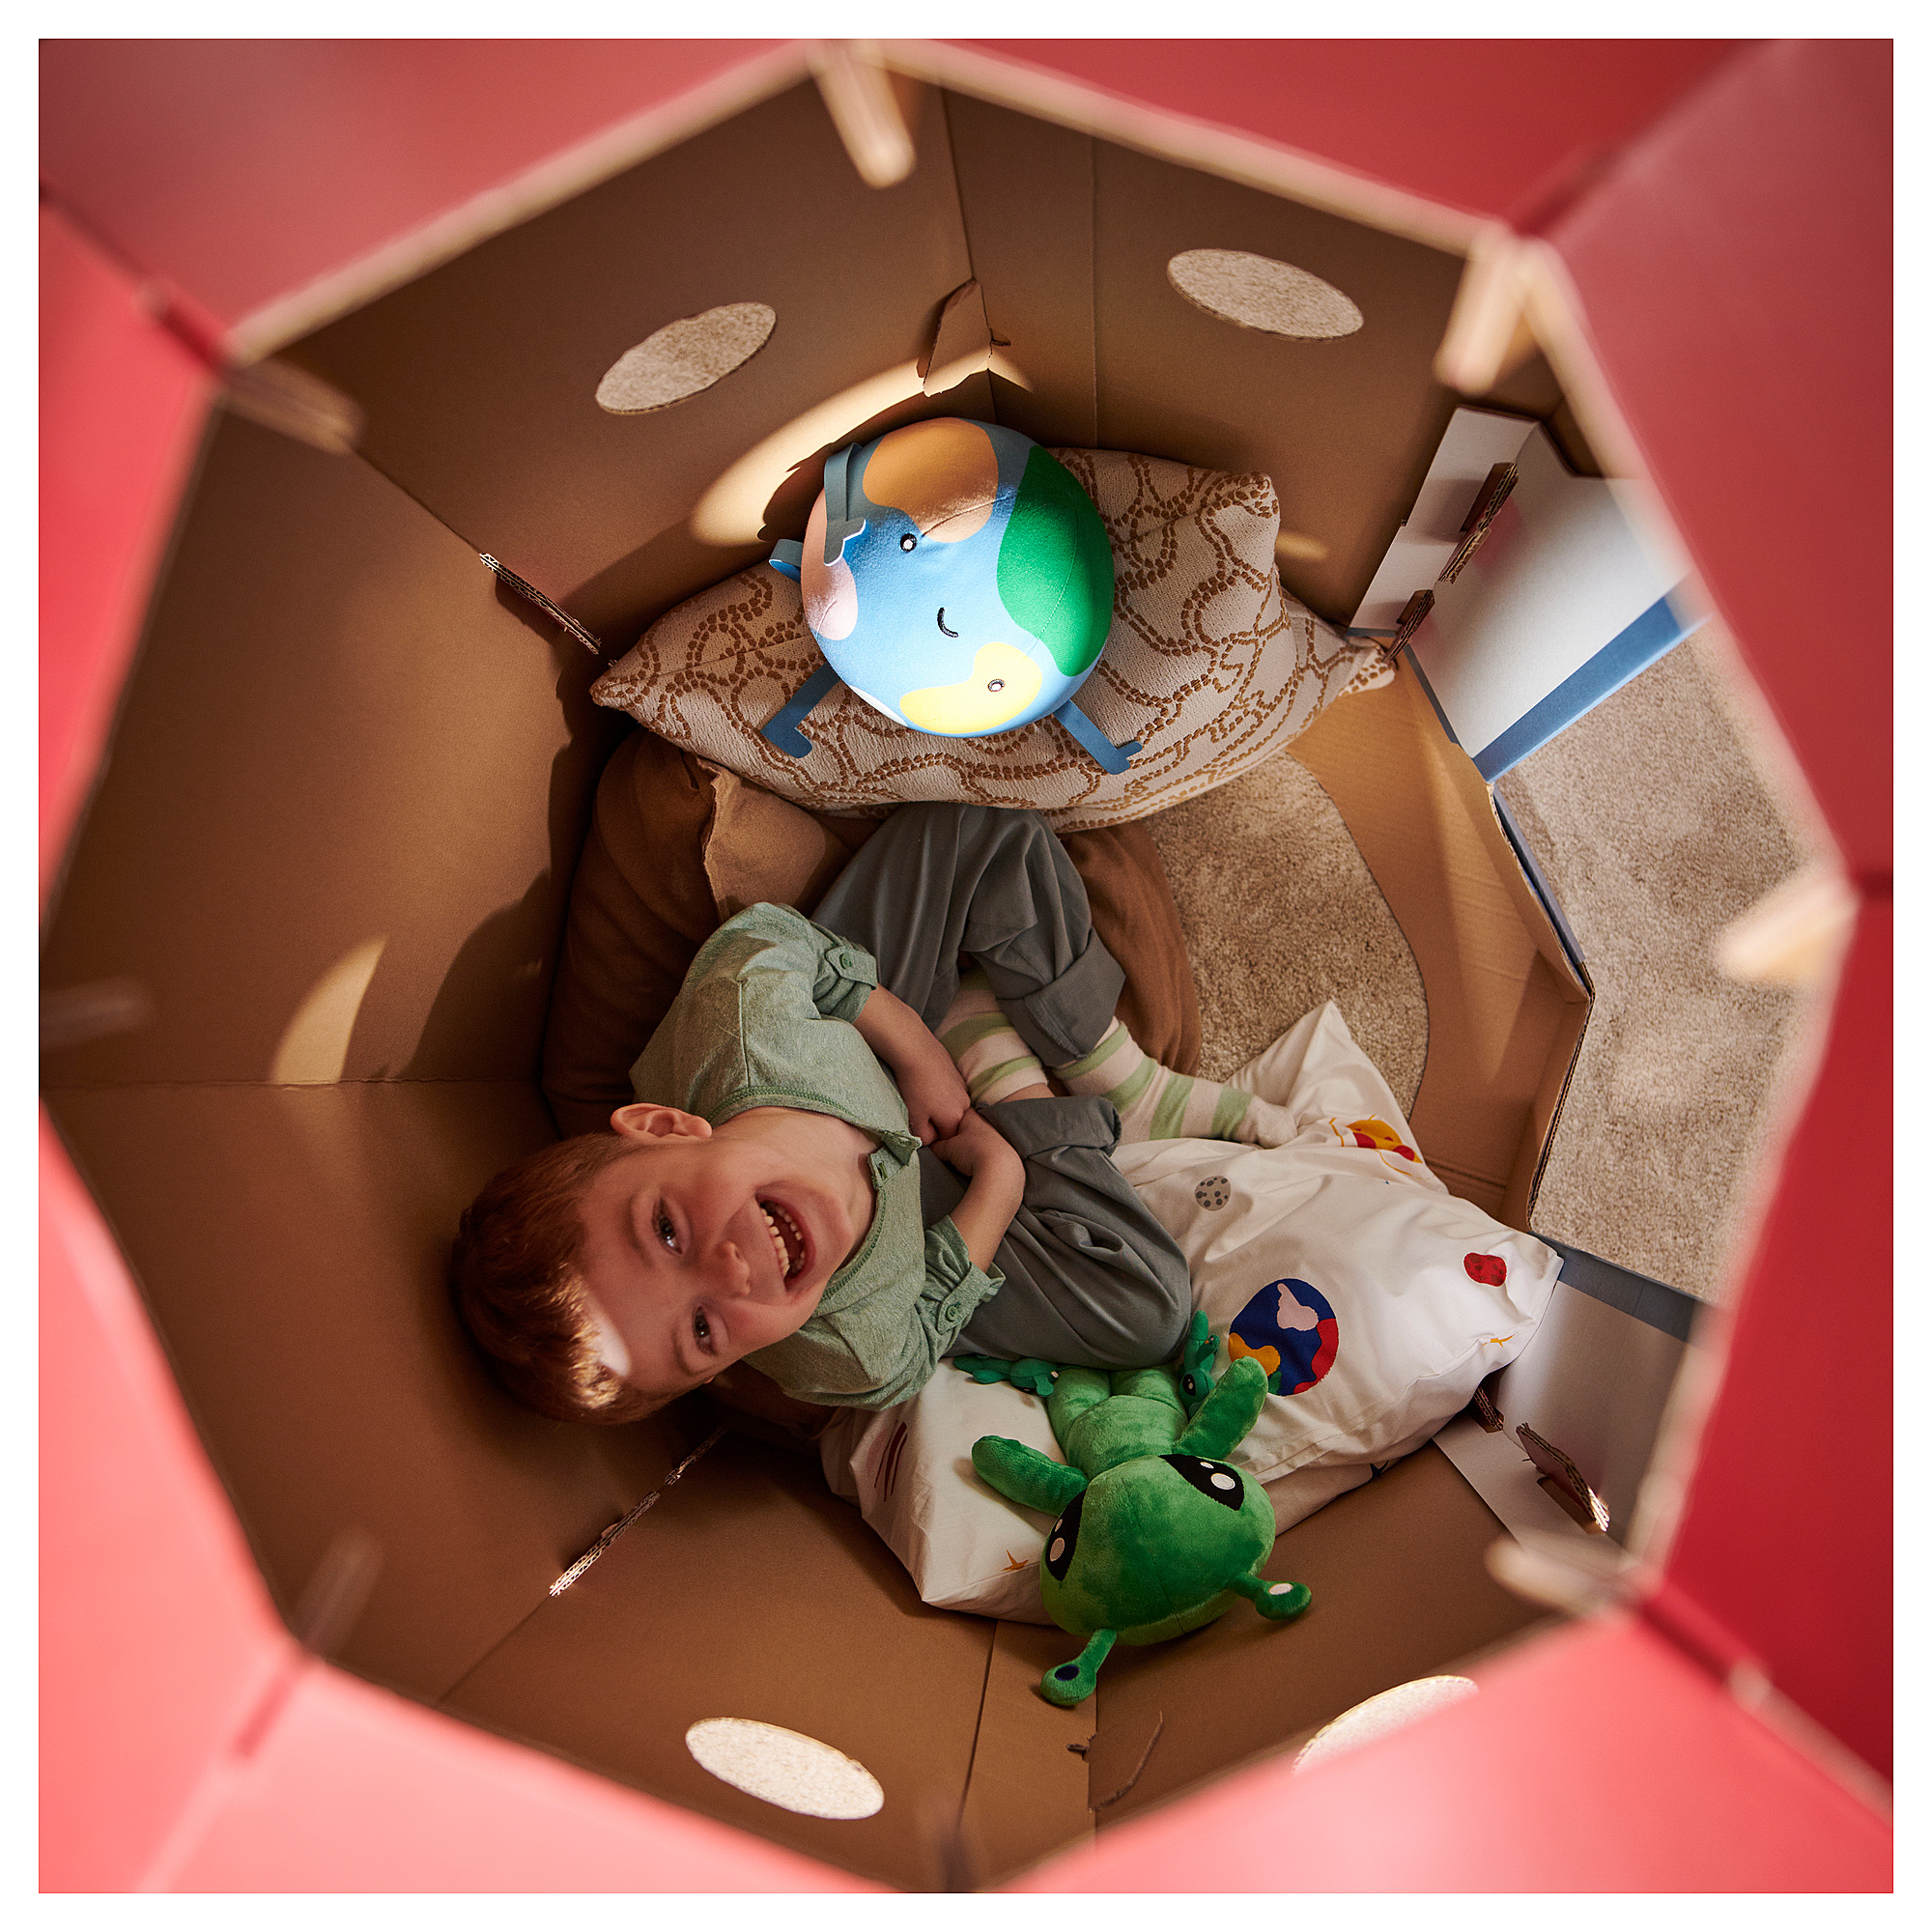 AFTONSPARV children's tent